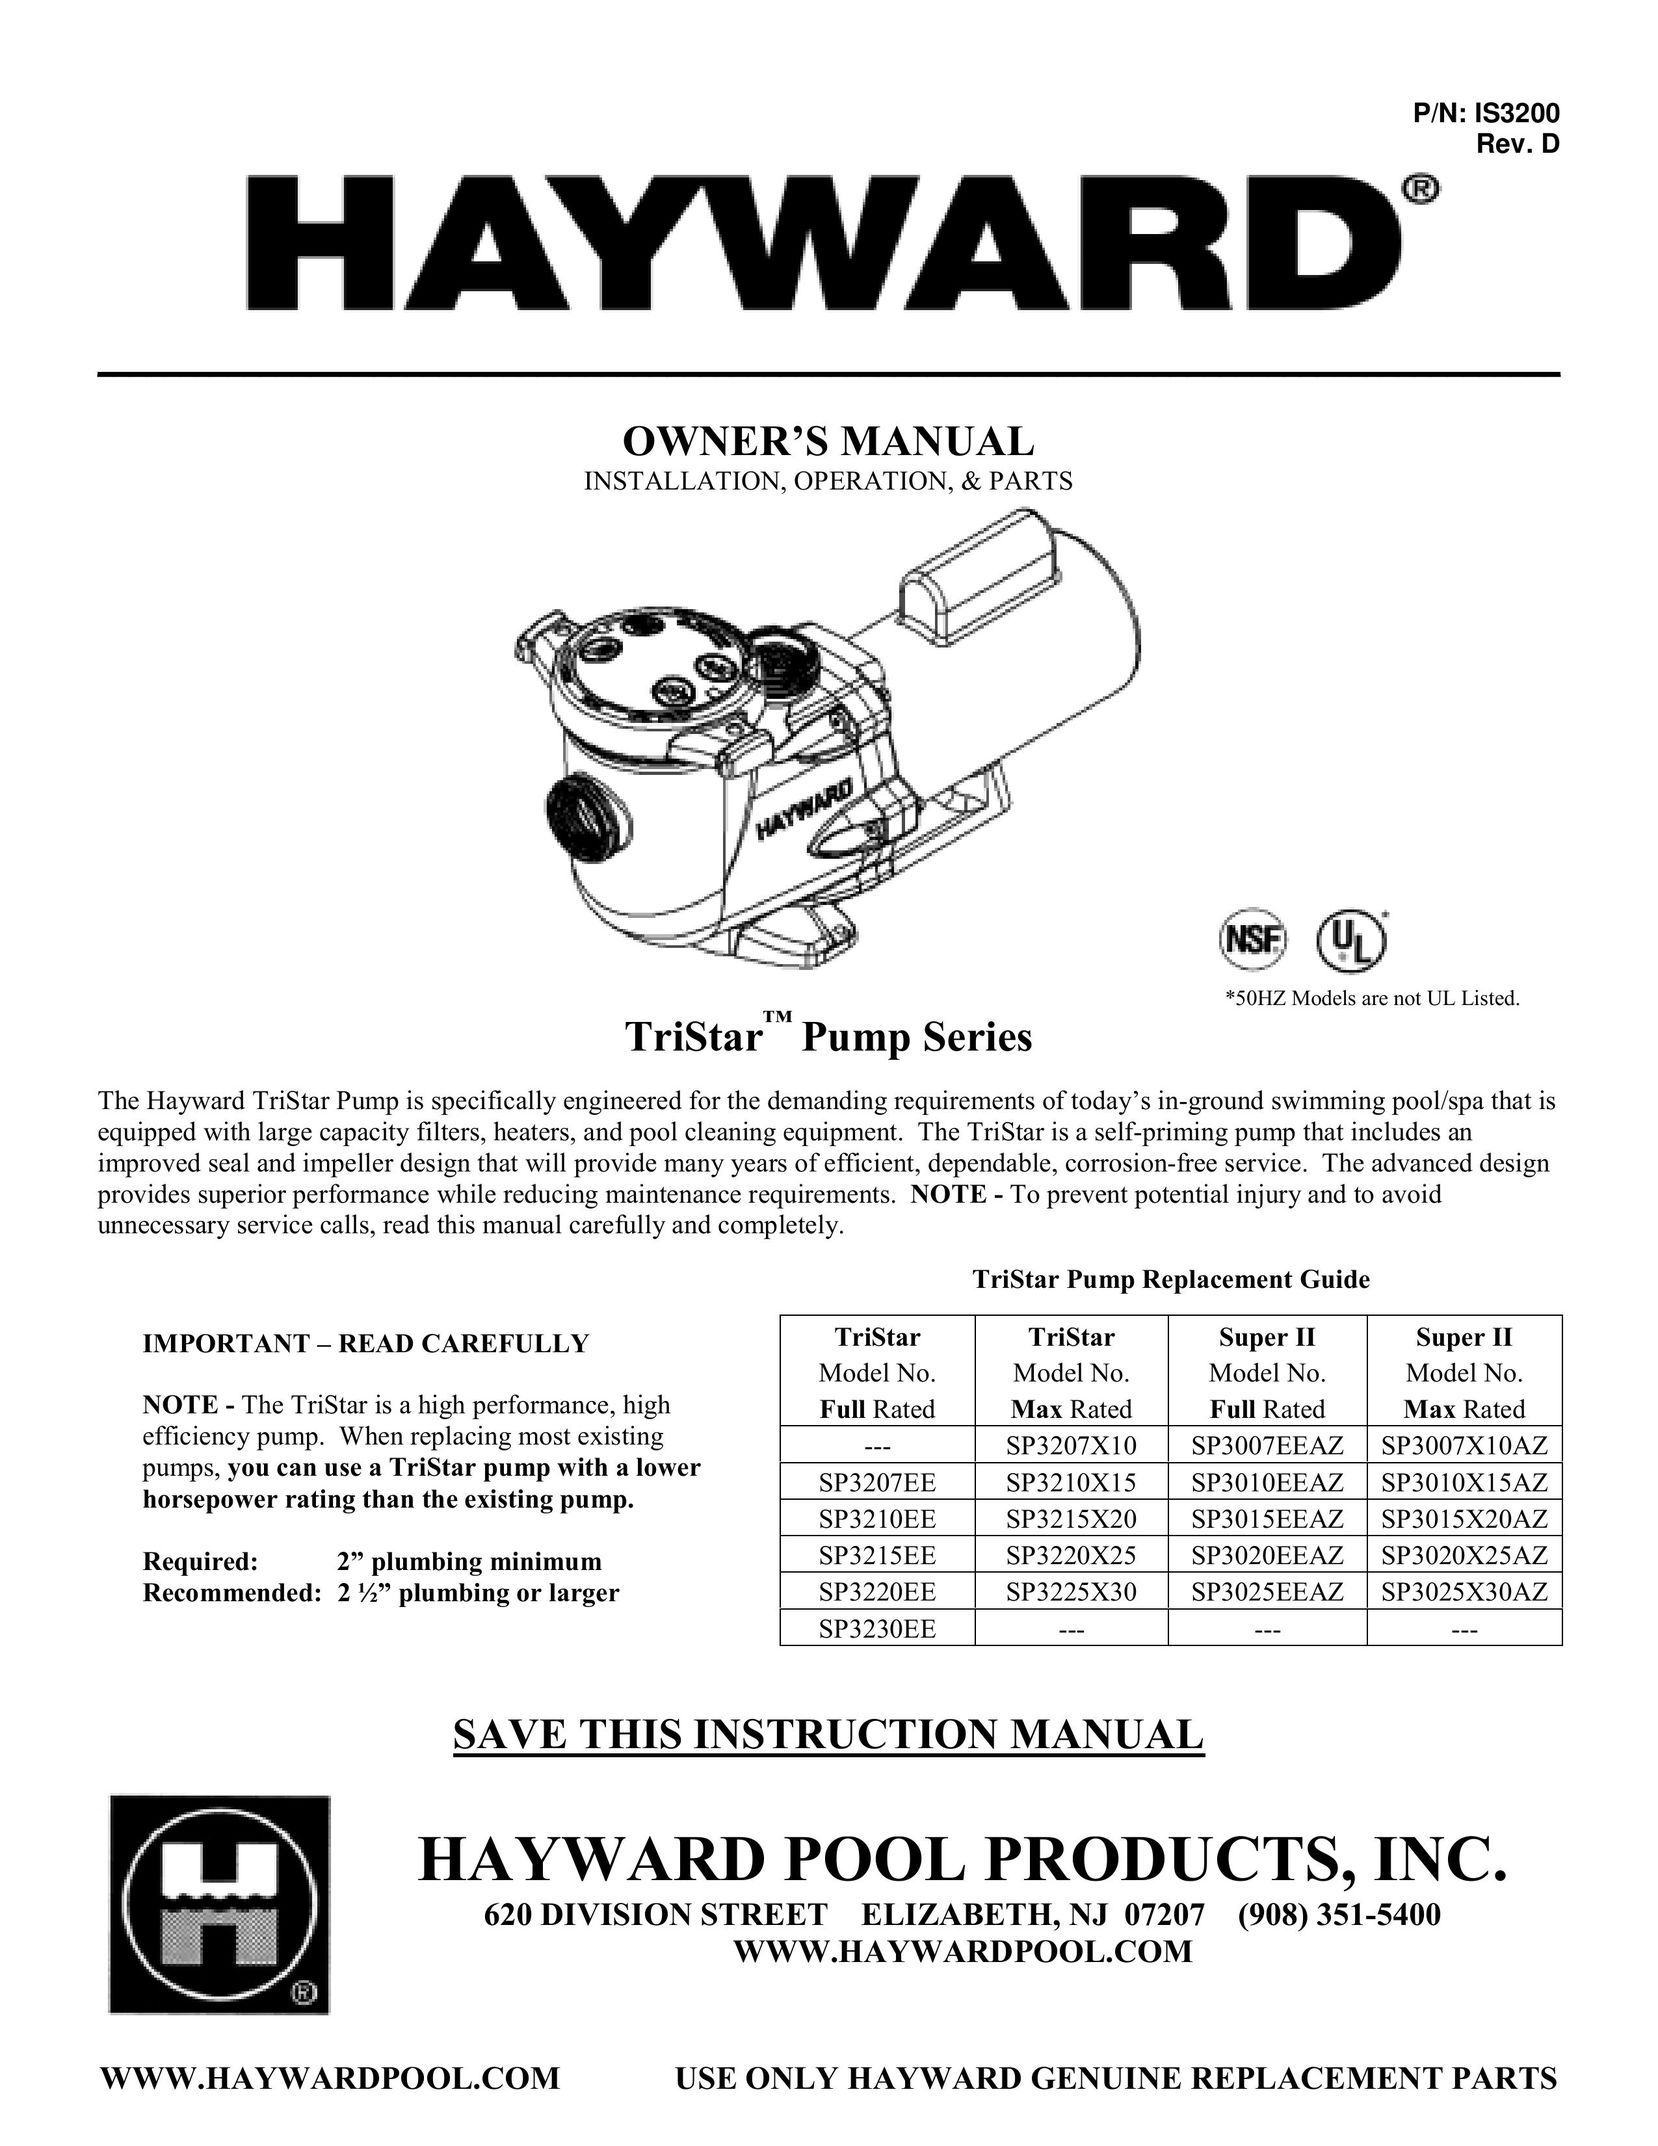 TriStar SP3010EEAZ Heat Pump User Manual